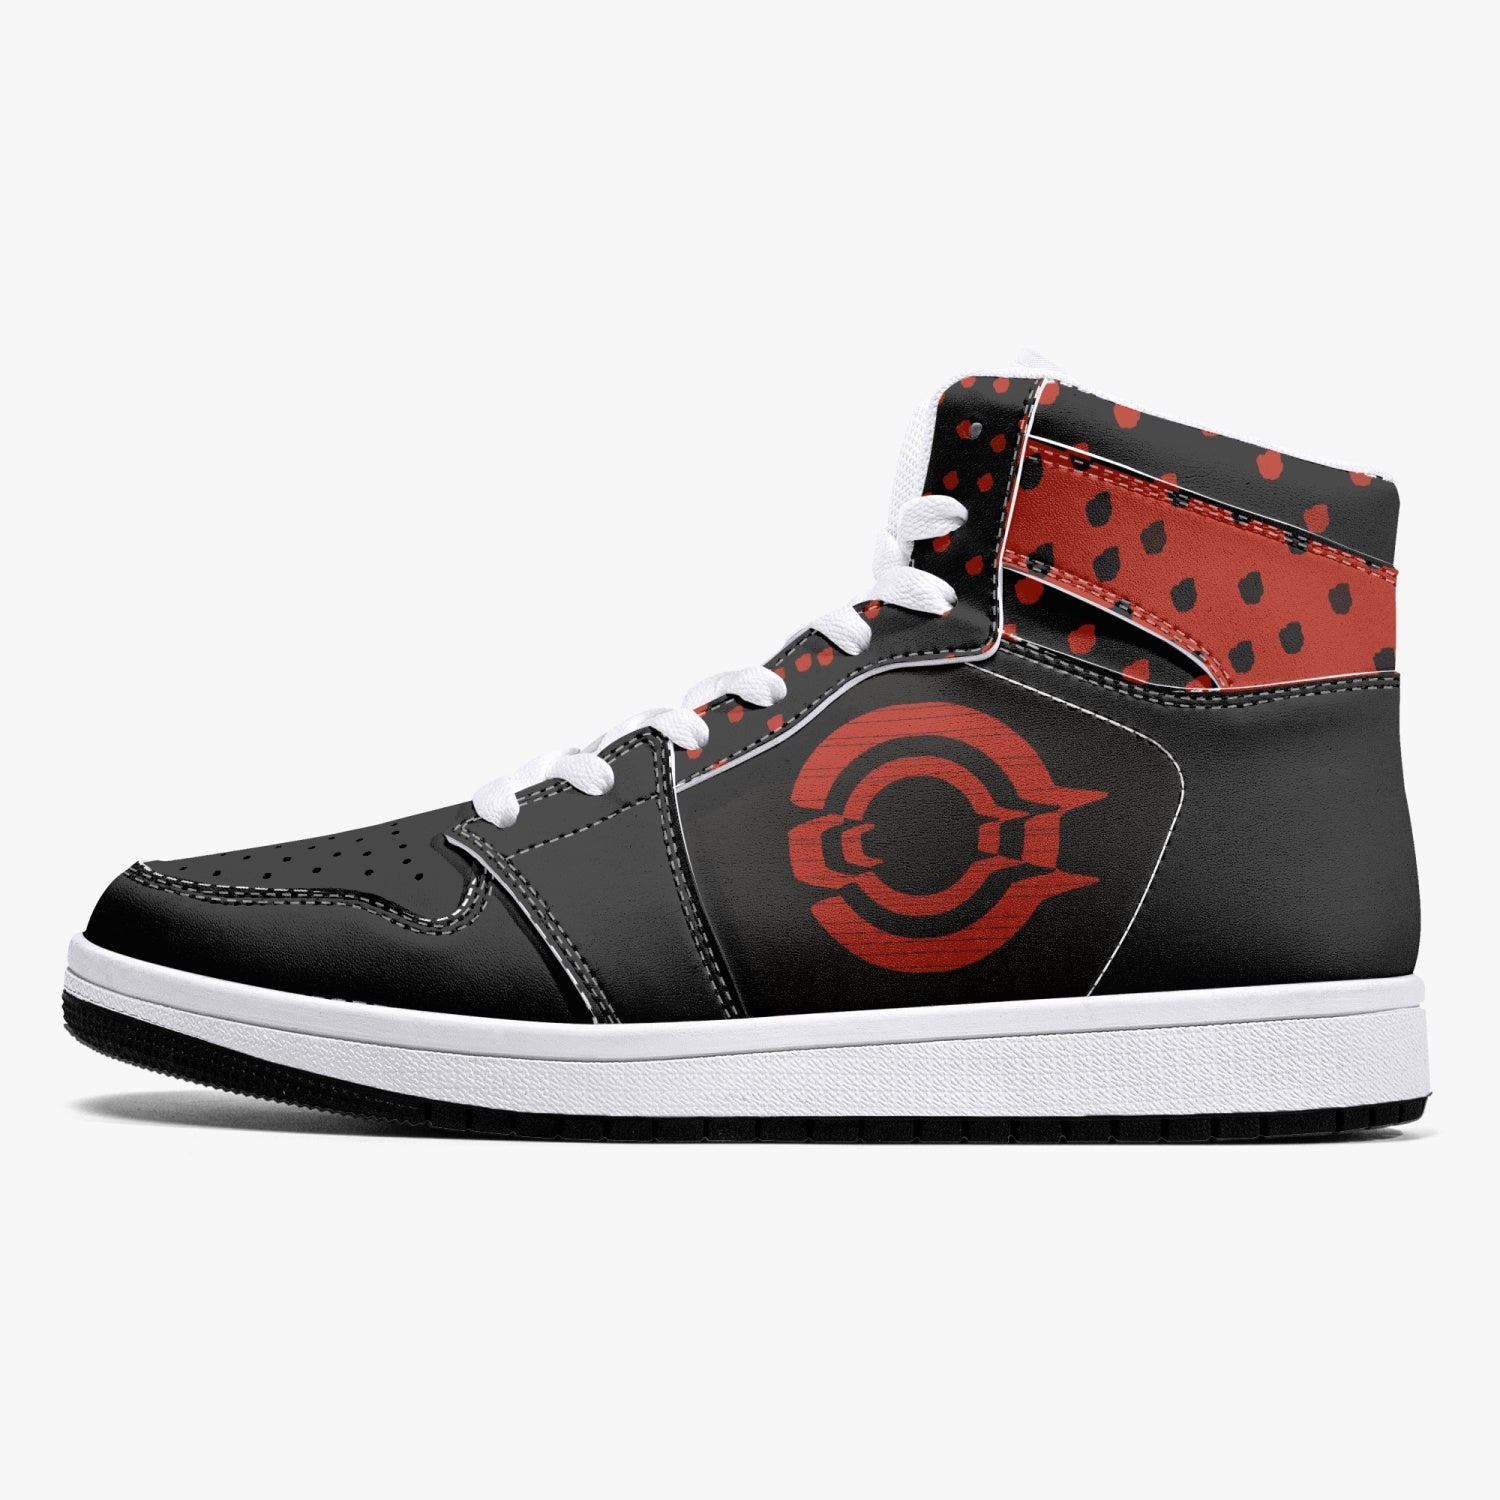 OOTAMAWAE Original Brand High-Top Leather Sneakers - Black $ Red Dots KilyClothing